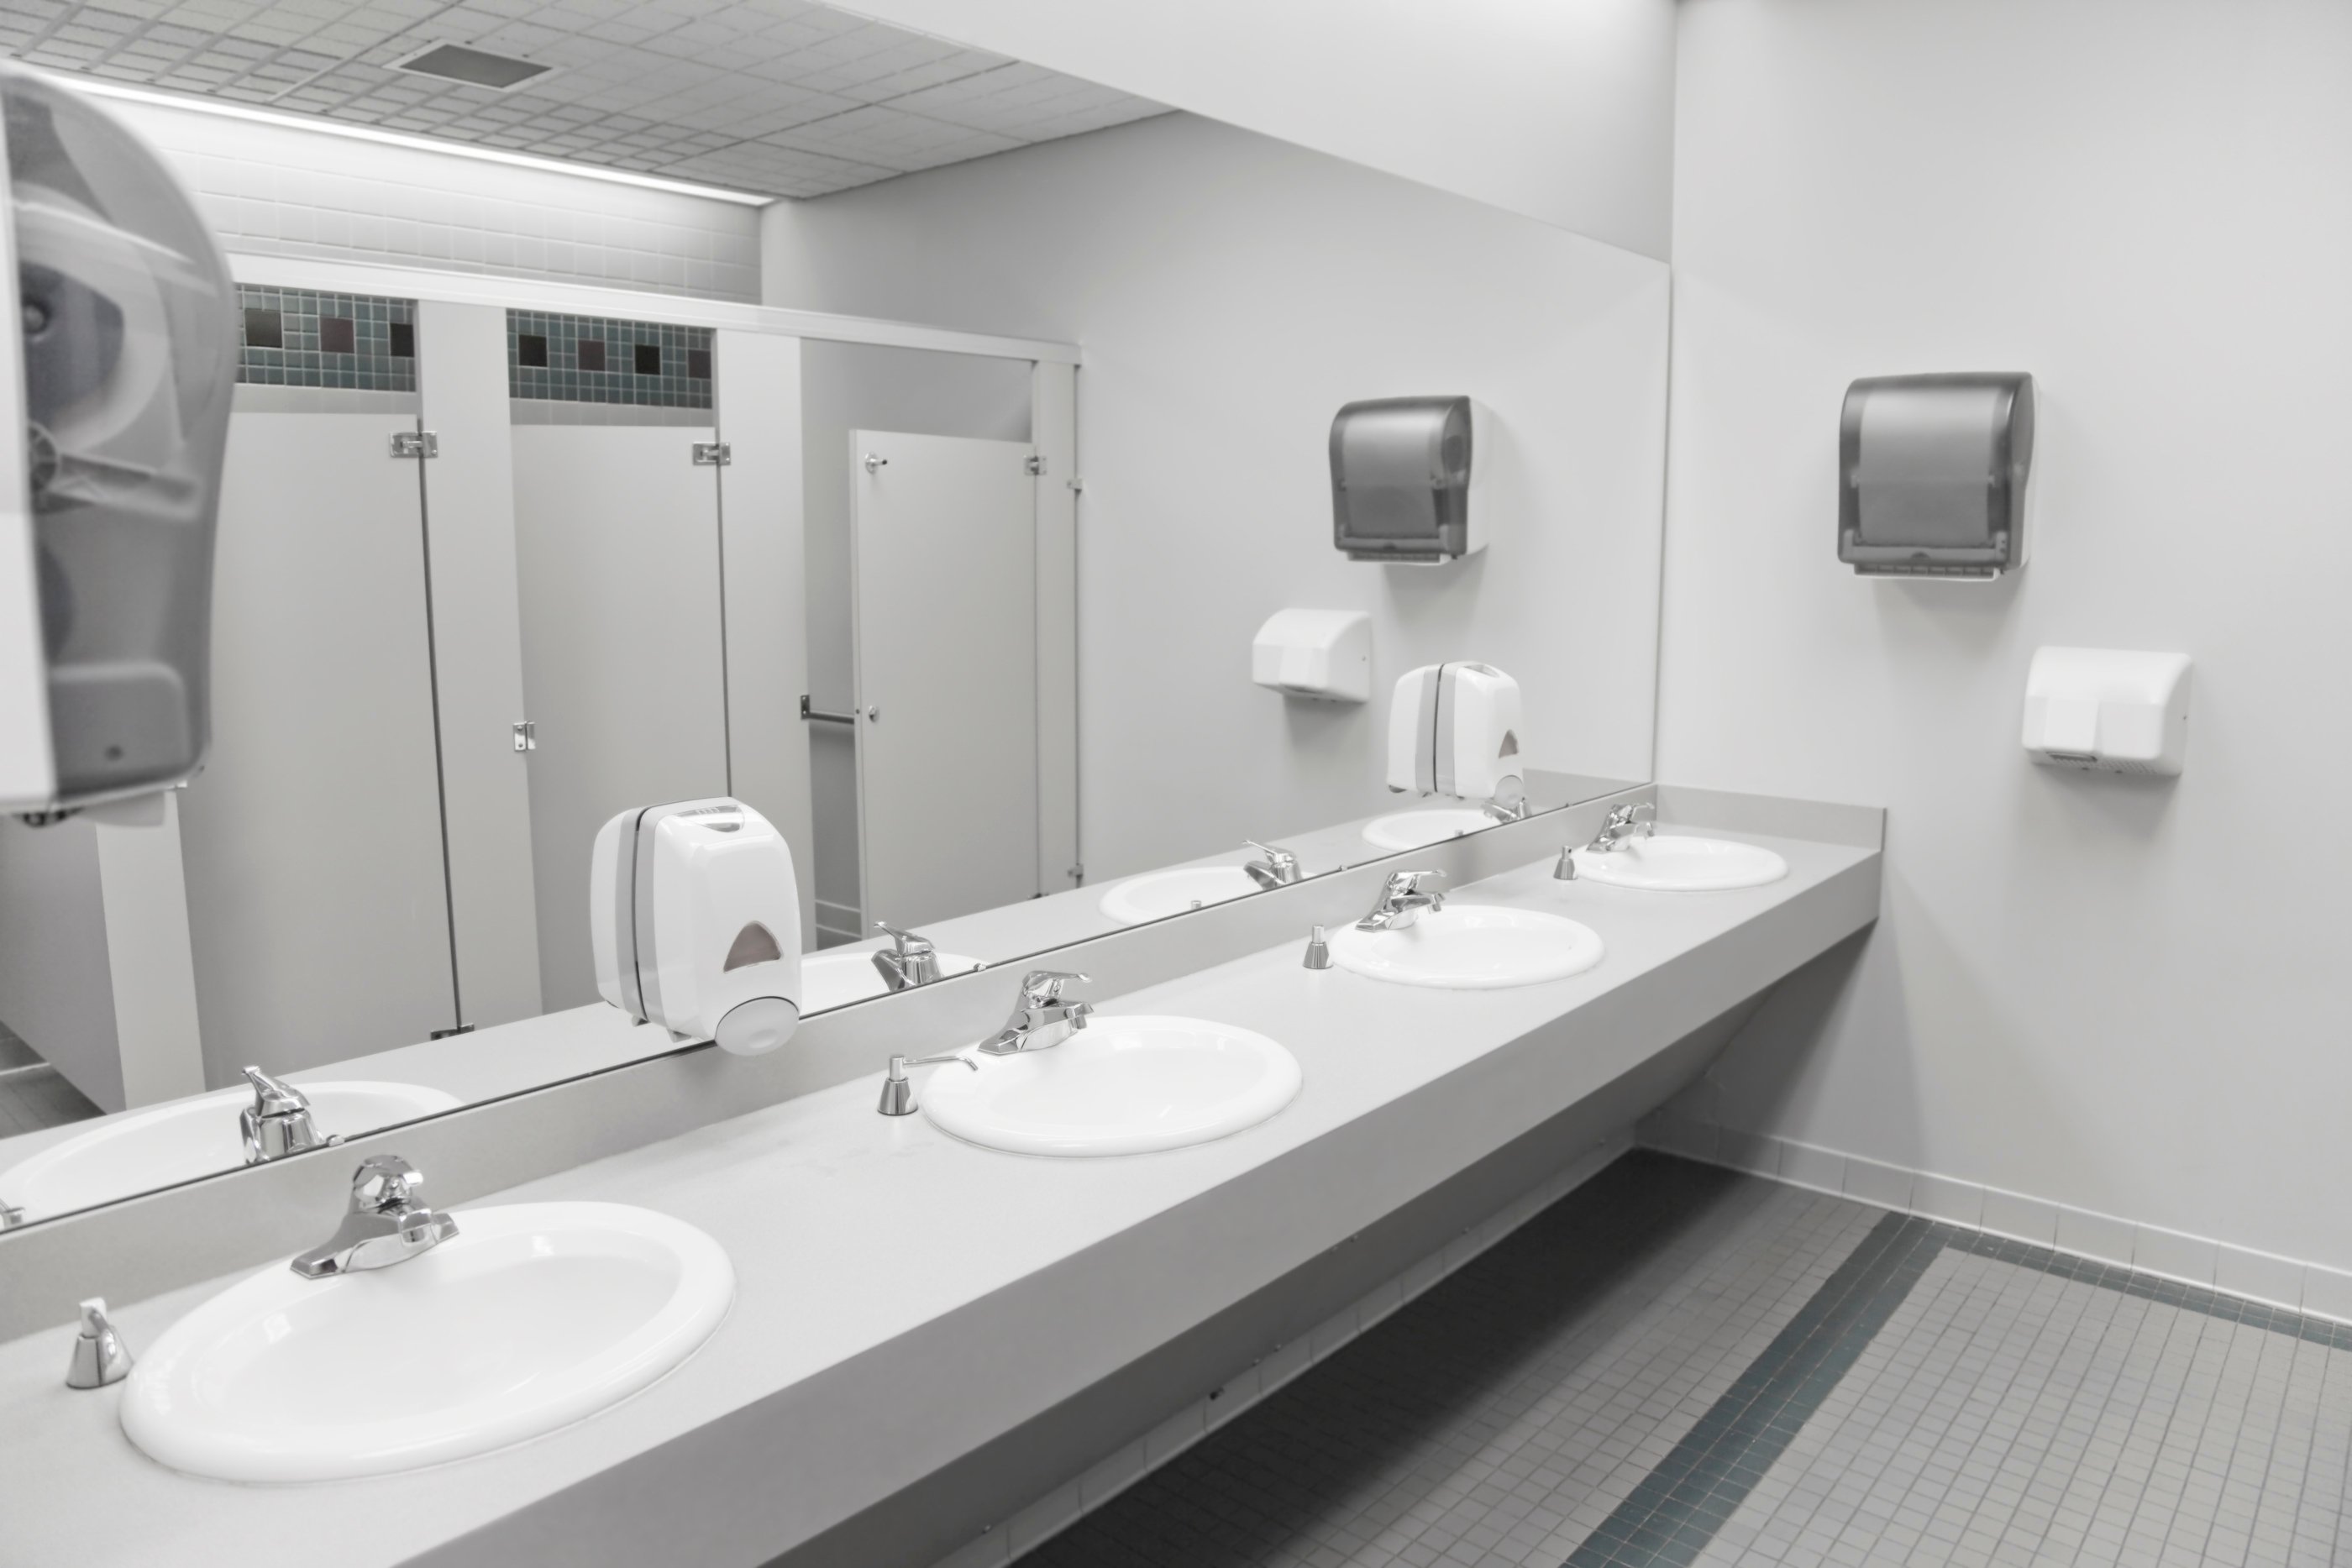 bodrick commercial handicap bathroom sink soap dispenser replacement